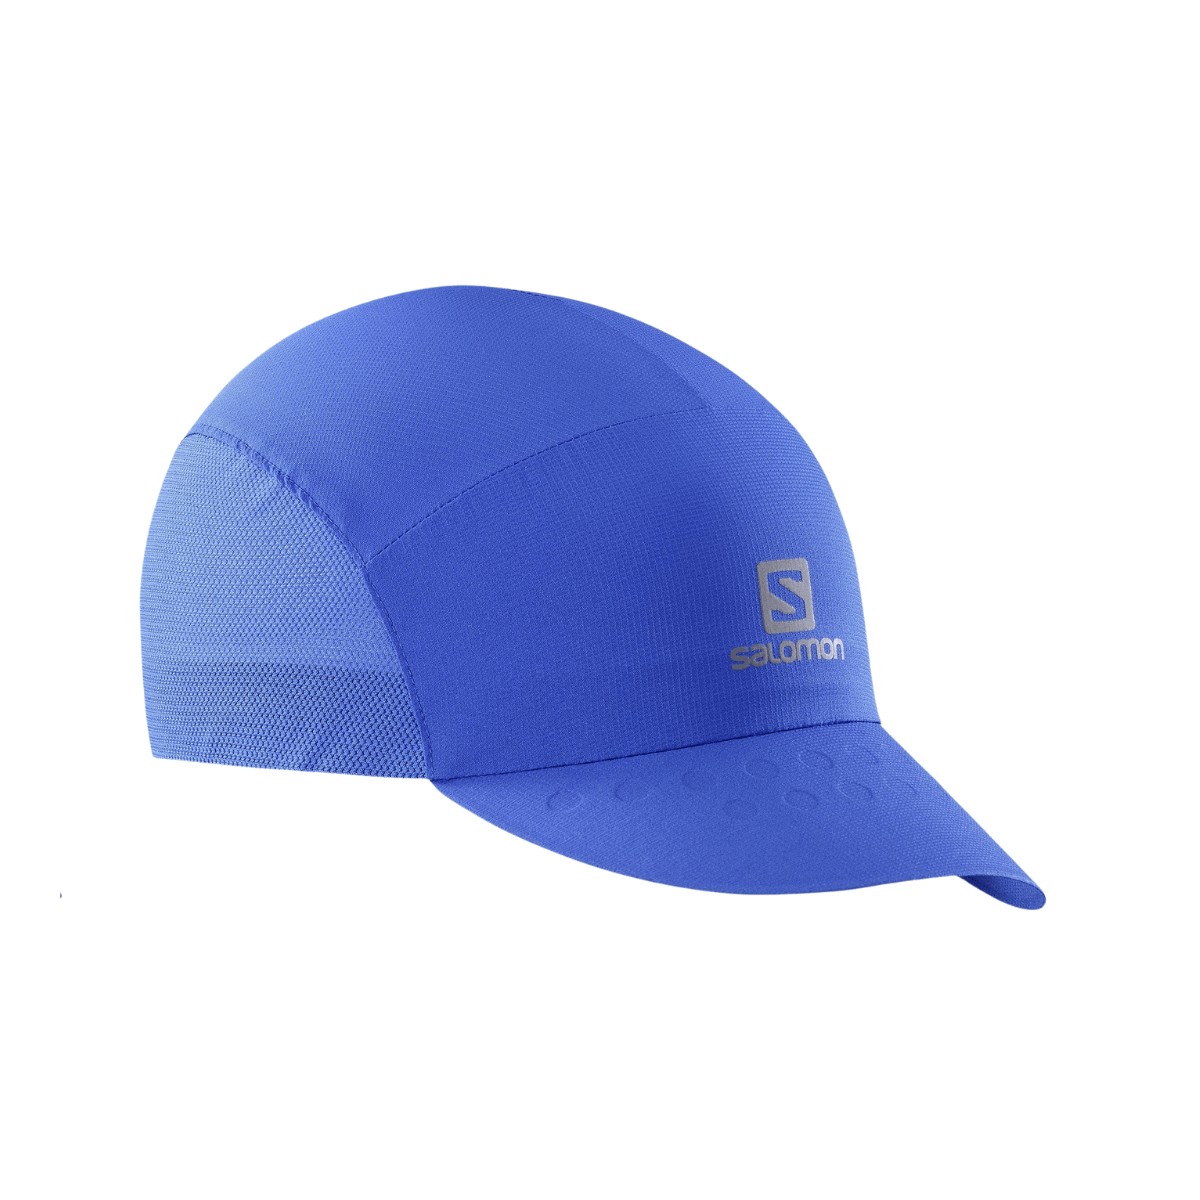 Salomon XA Compact Mütze Blau Grau